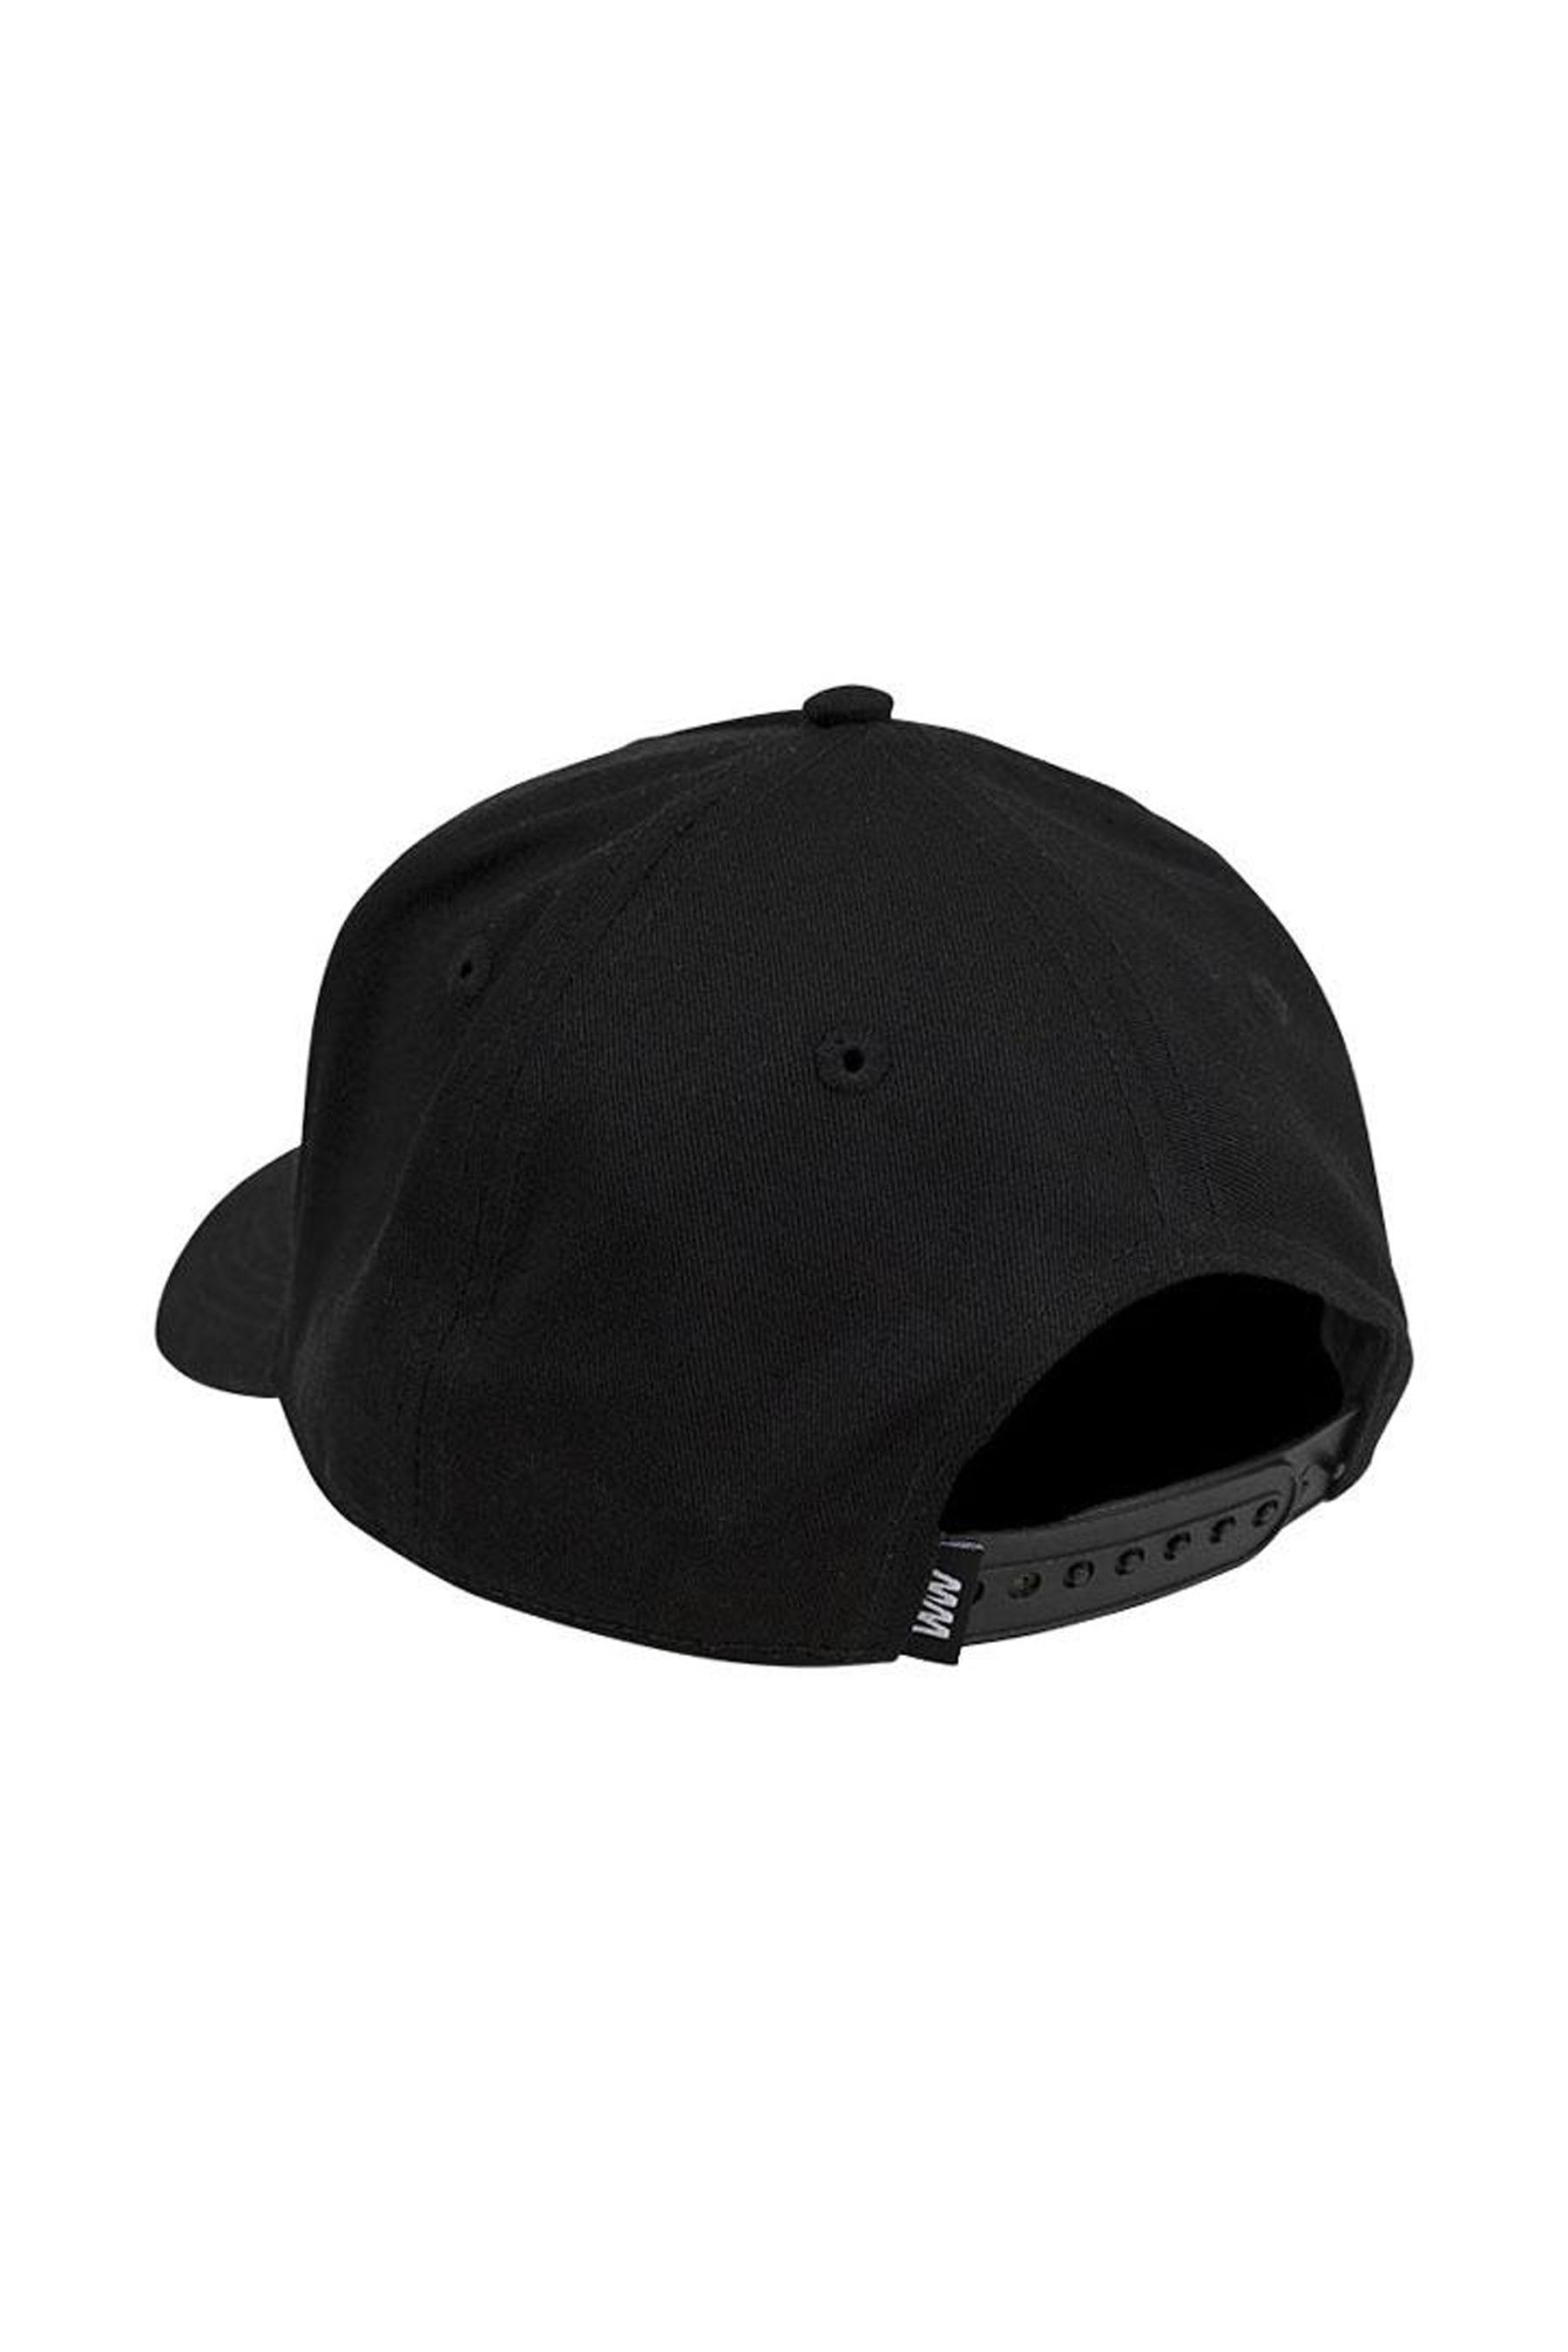 JETPILOT RX YOUTH CAP BLACK